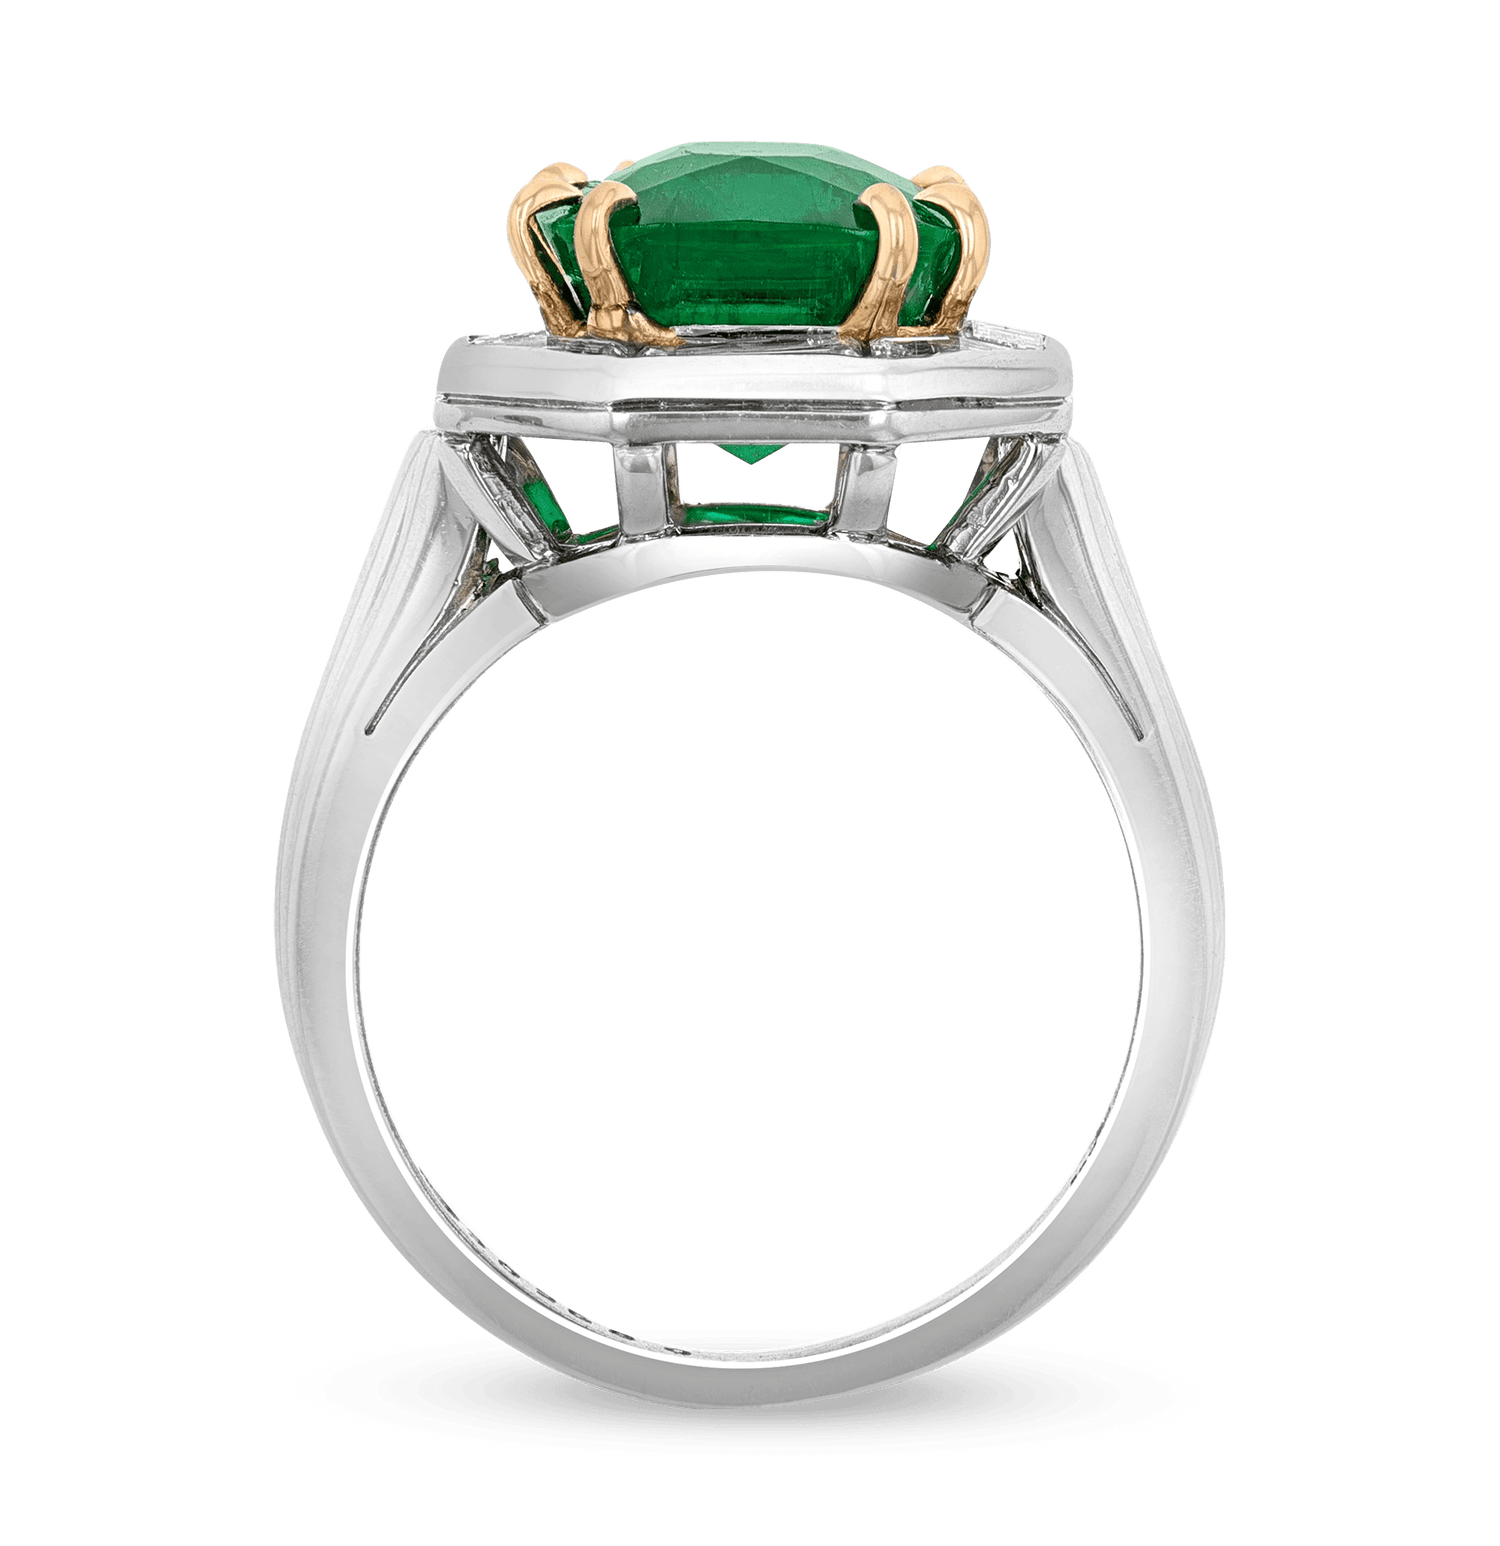 Oscar Heyman Emerald Ring, 5.73 carats